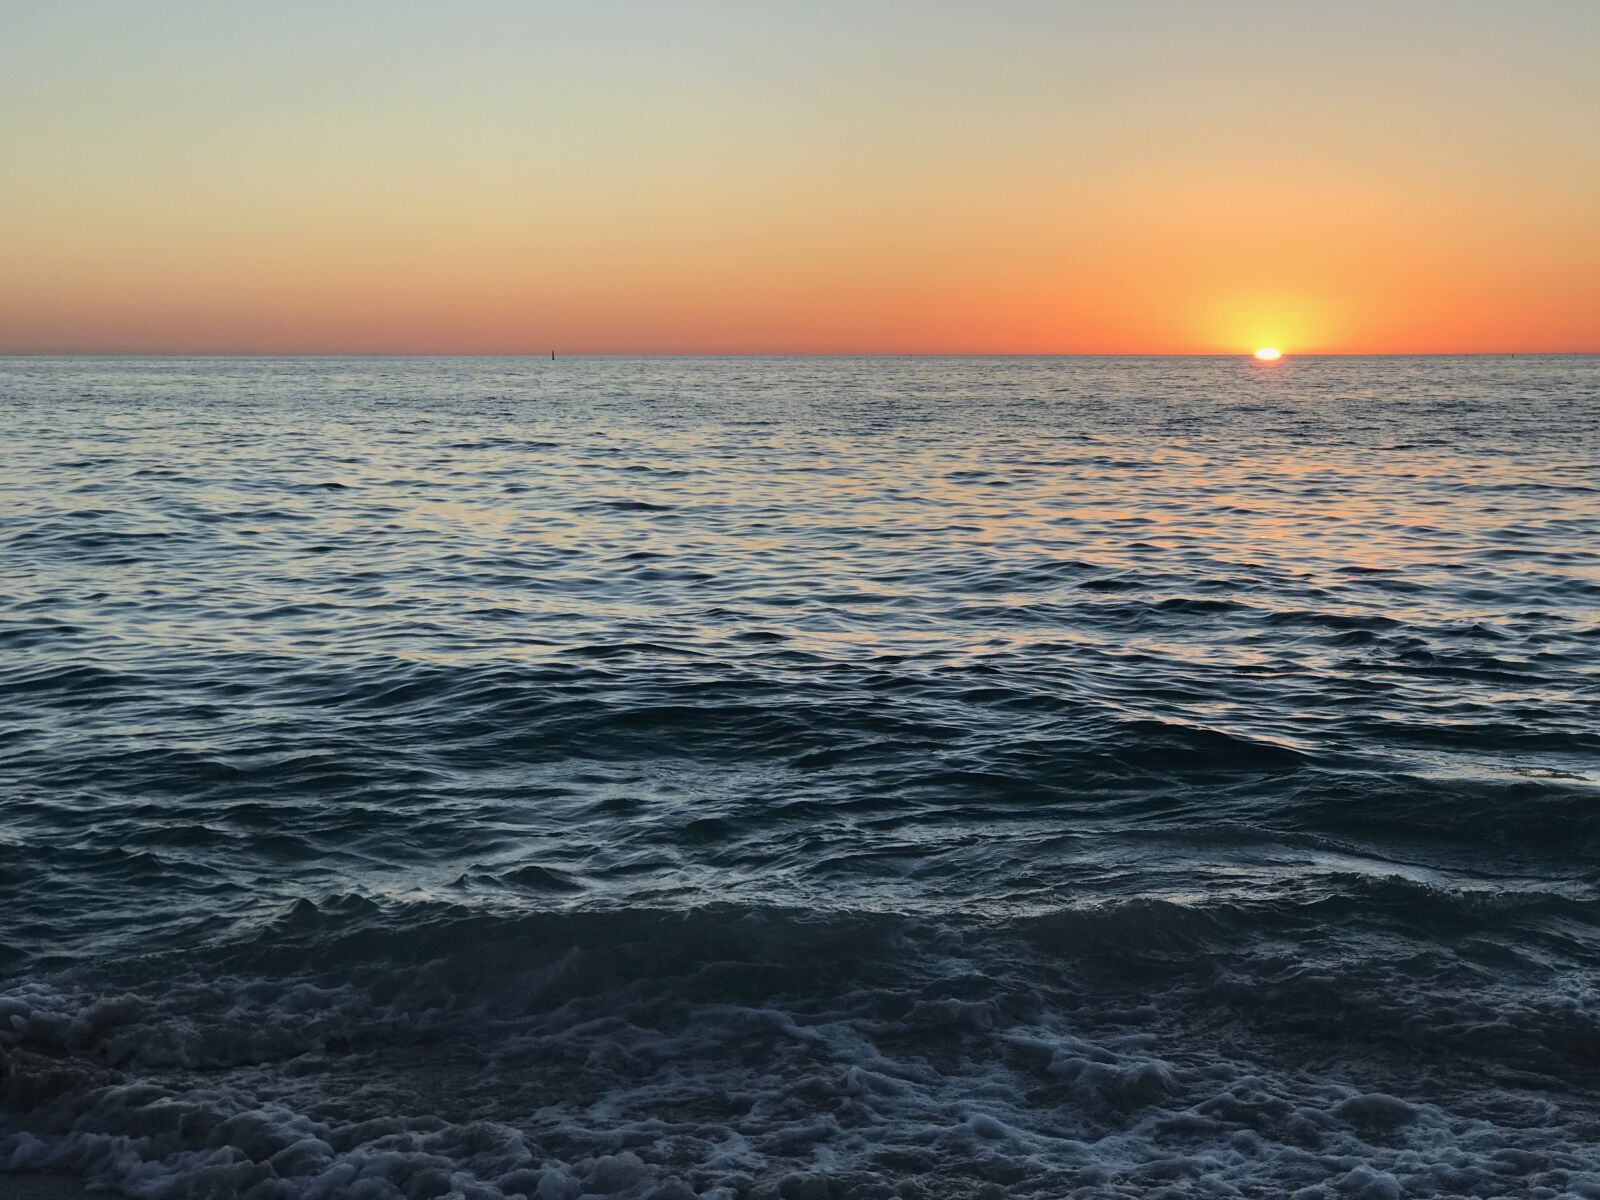 Apple iPhone 7 Plus + iPhone 7 Plus back dual camera 6.6mm f/2.8 sample photo. Beach, ocean, sunset photography